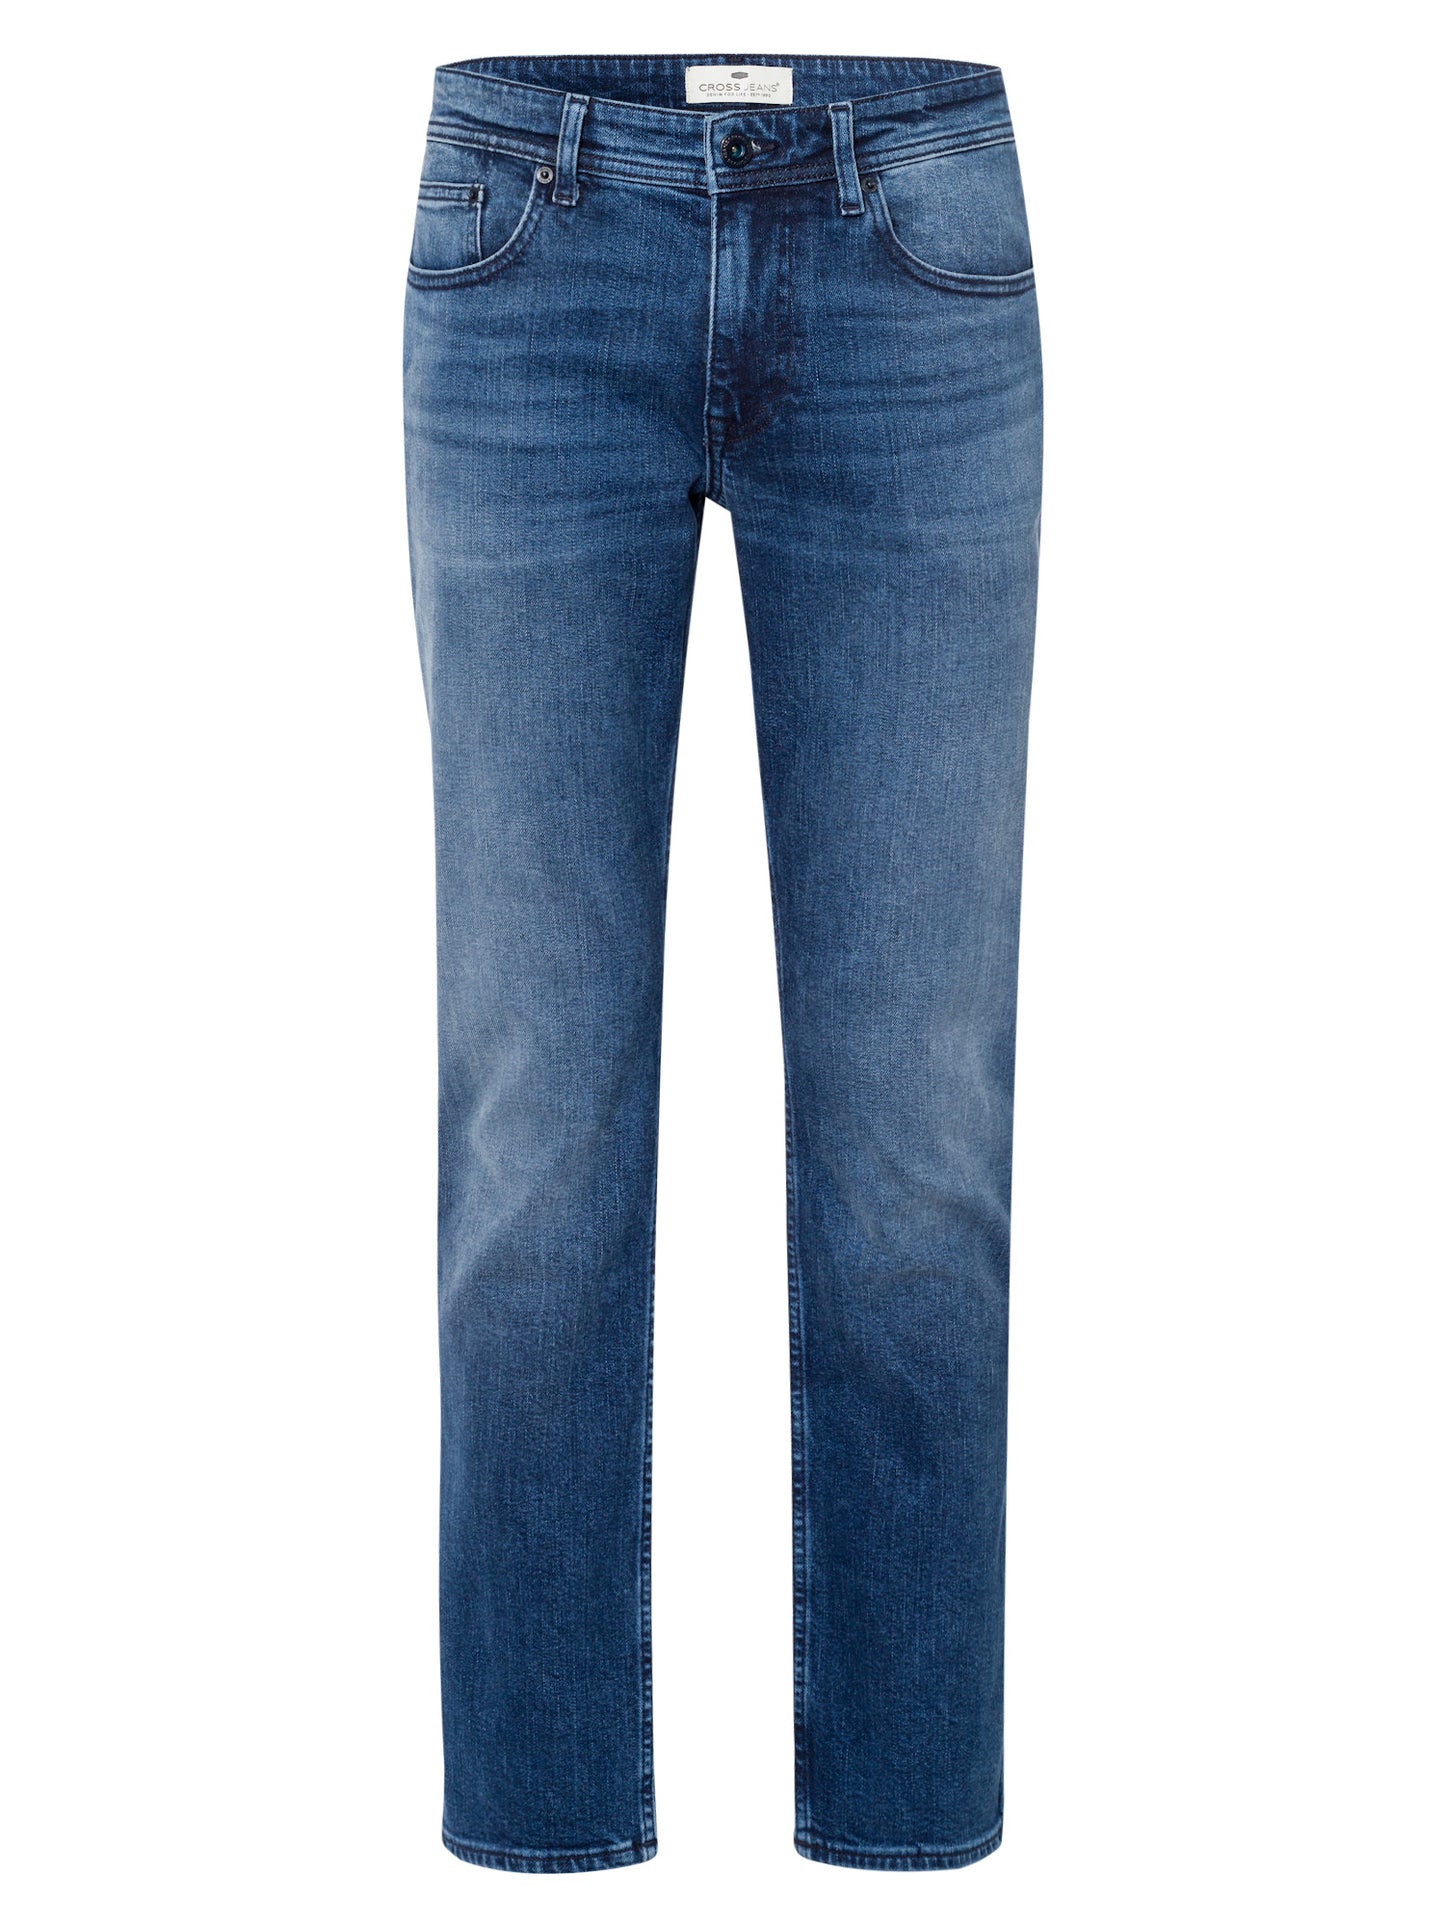 Dylan men's jeans regular fit regular waist straight leg dark blue